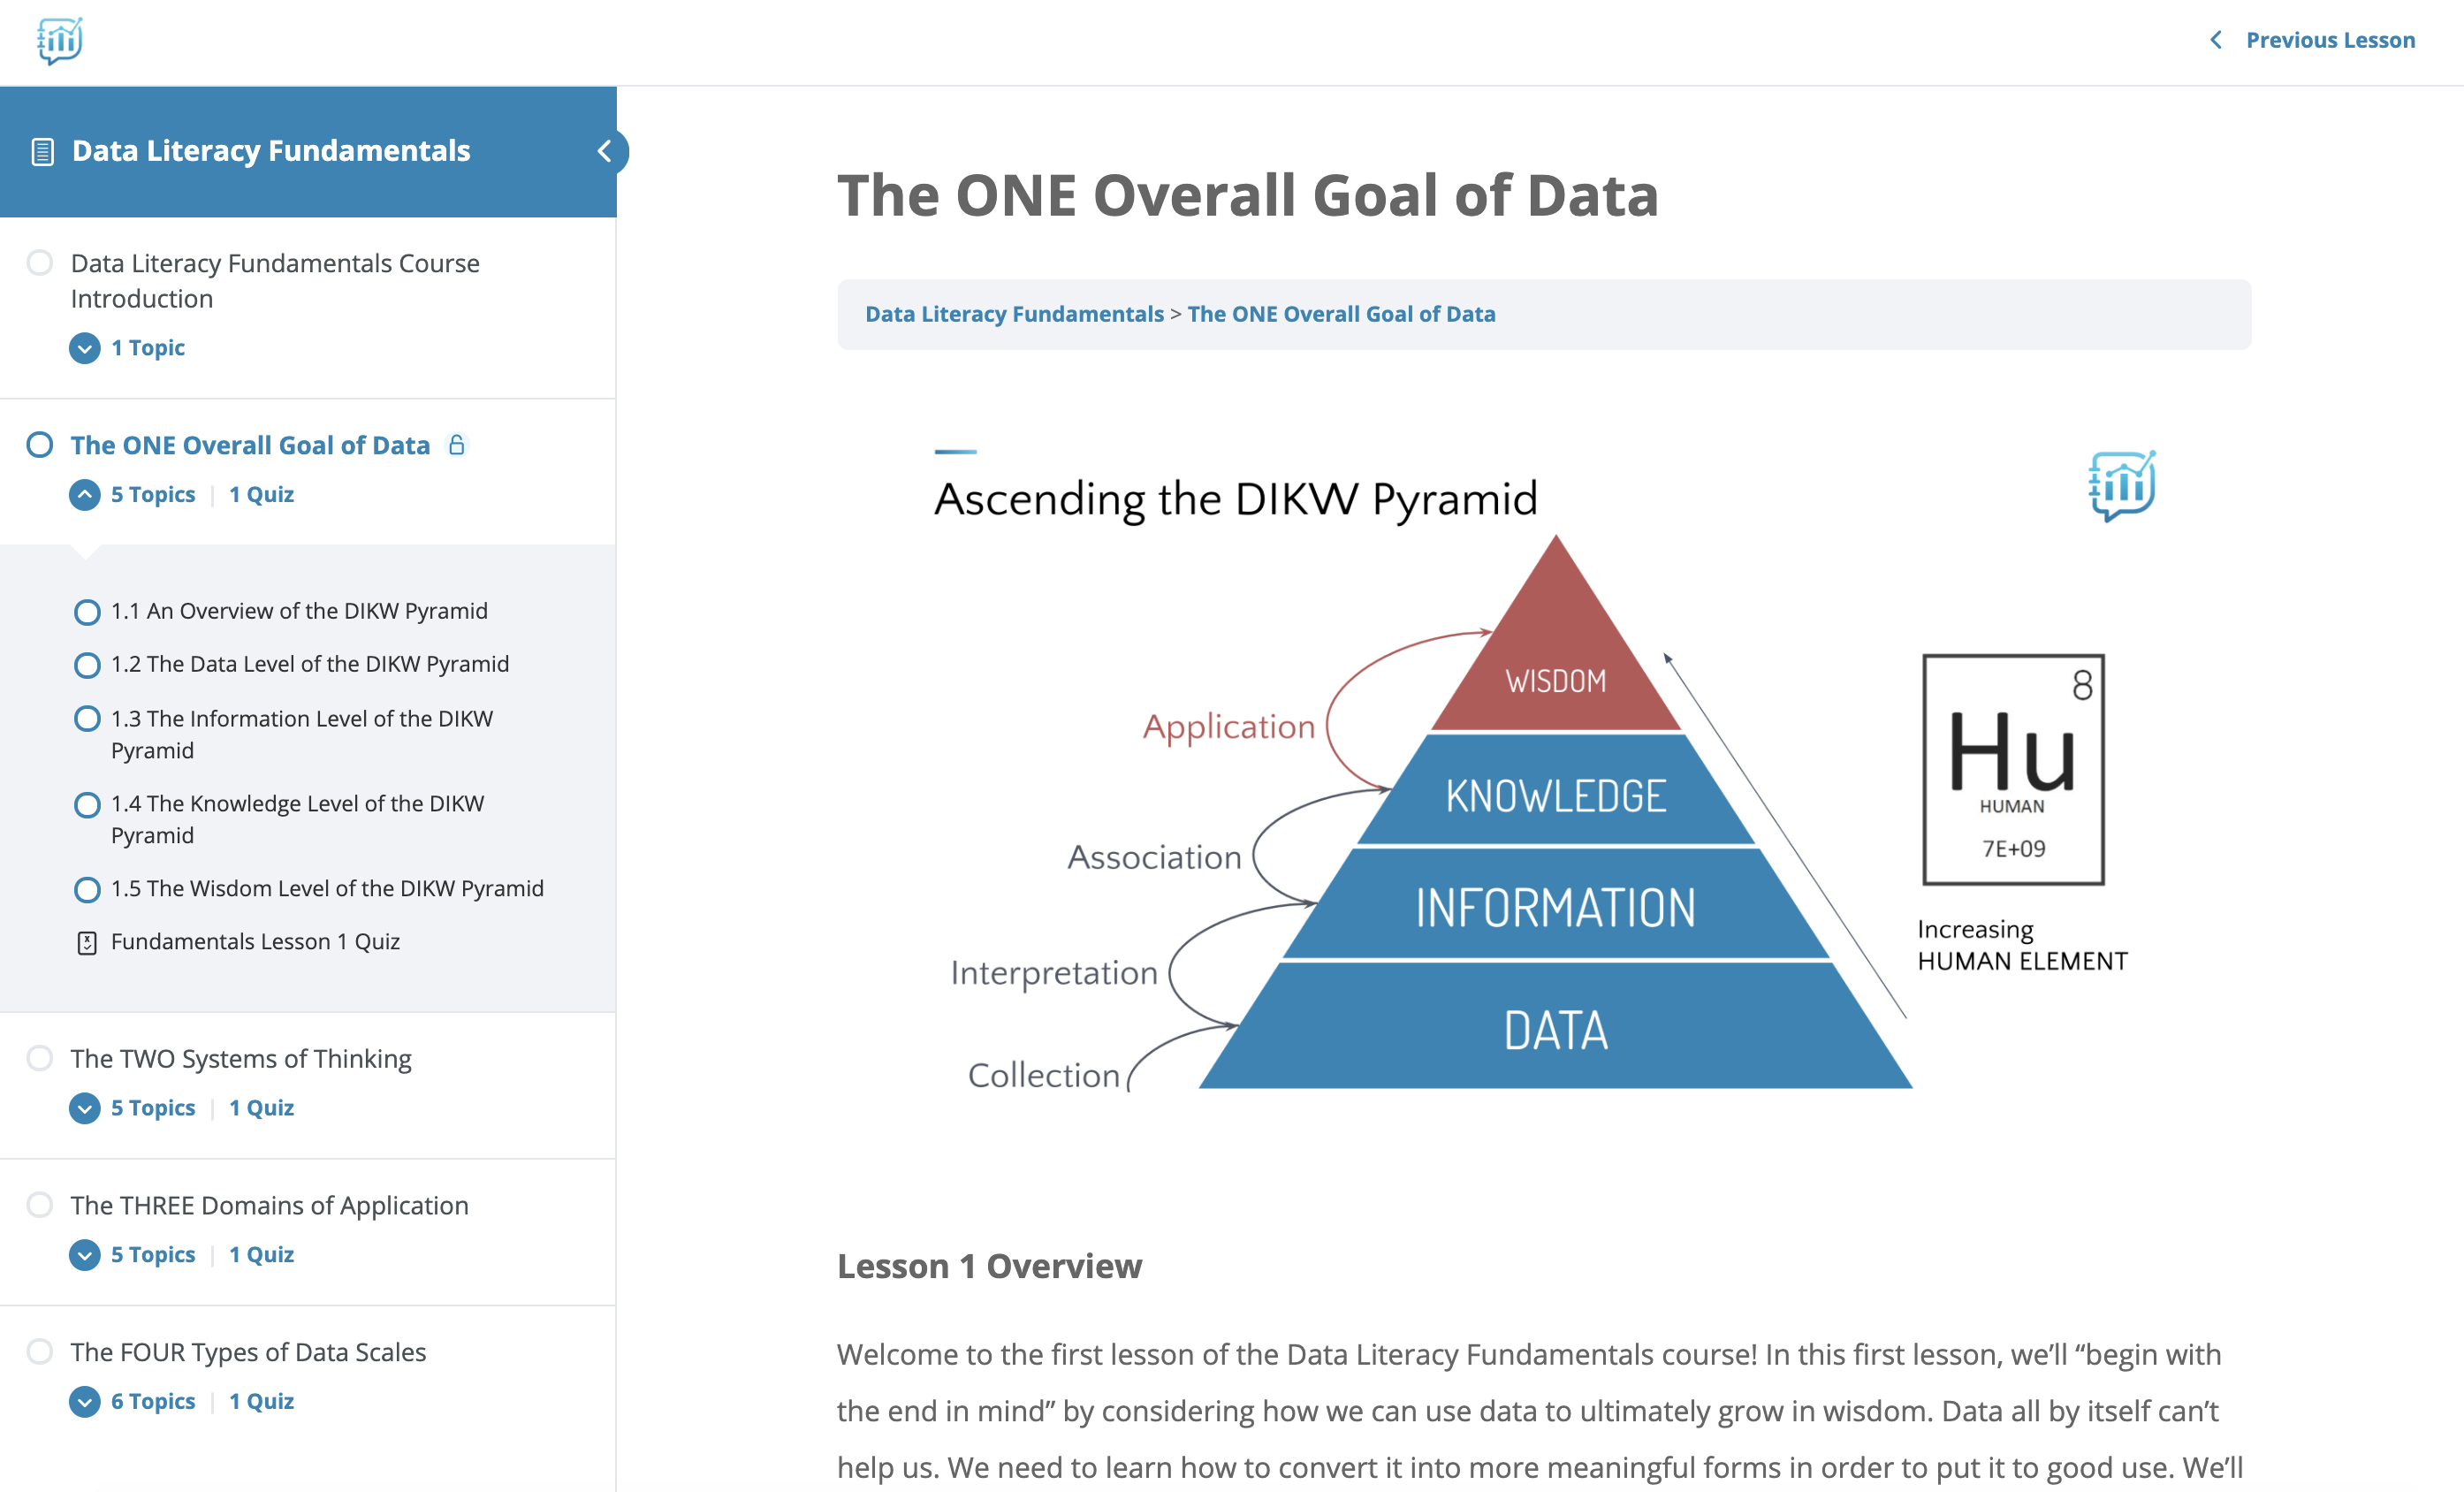 Data Literacy Fundamentals - Understanding the Power of Data | Data Literacy  